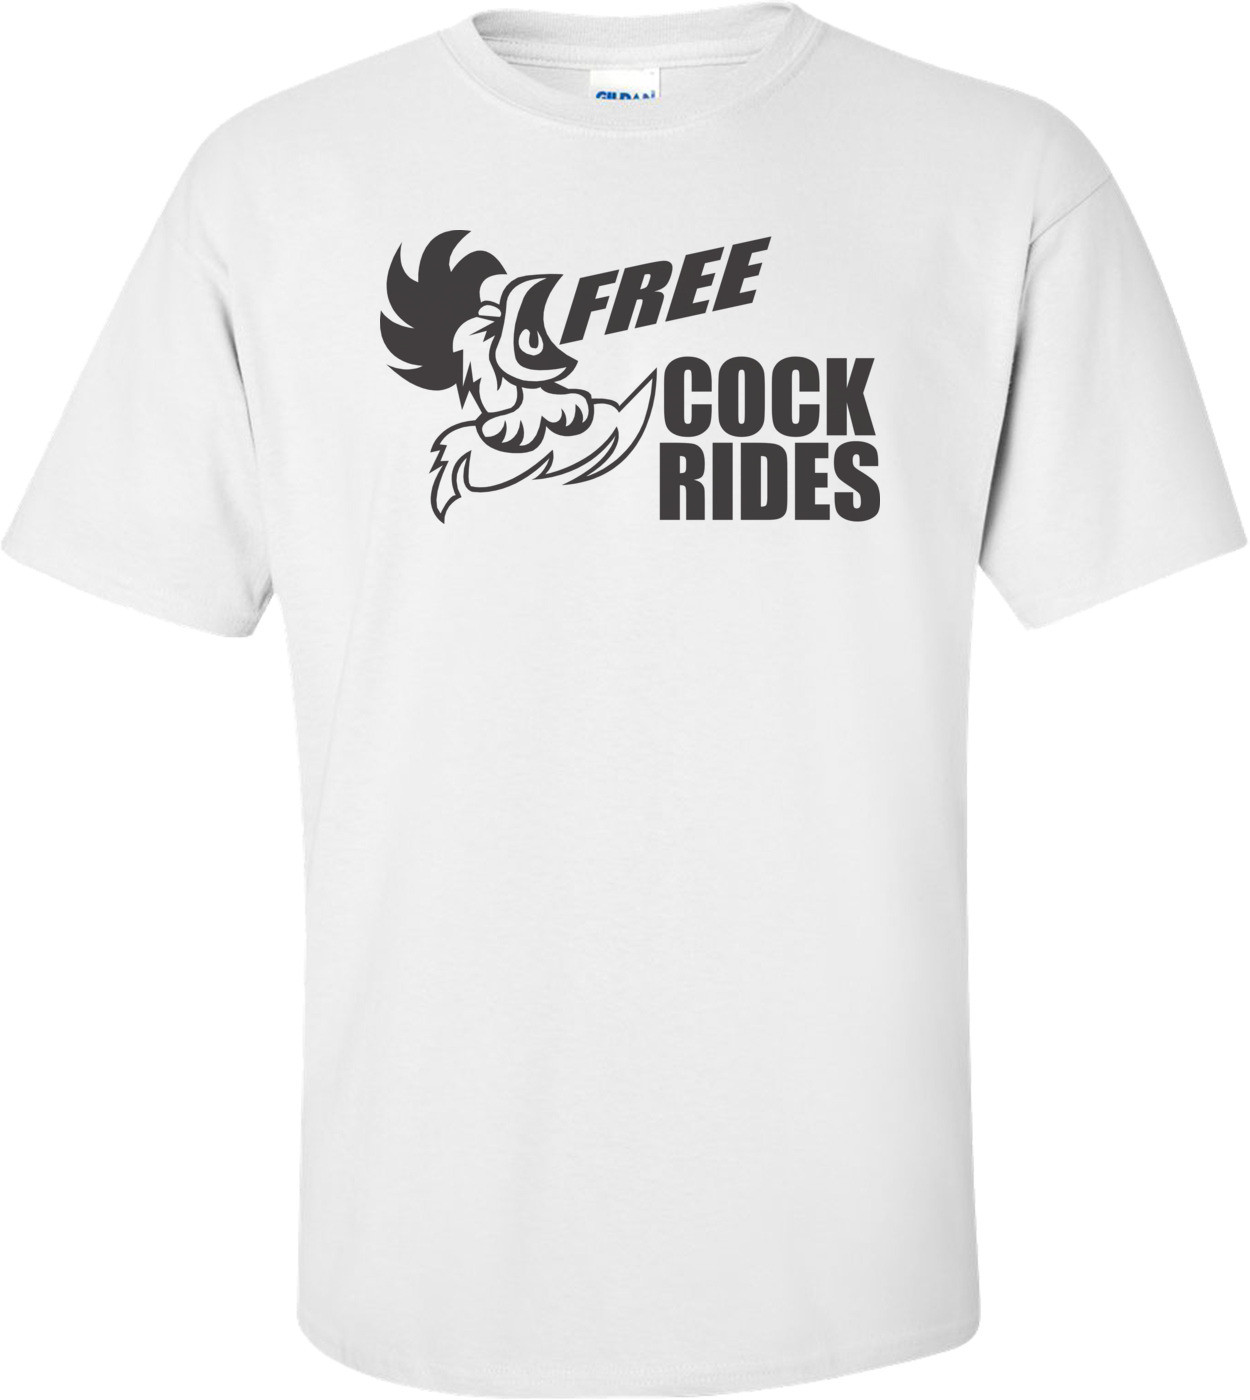 Free Cock Rides T-shirt